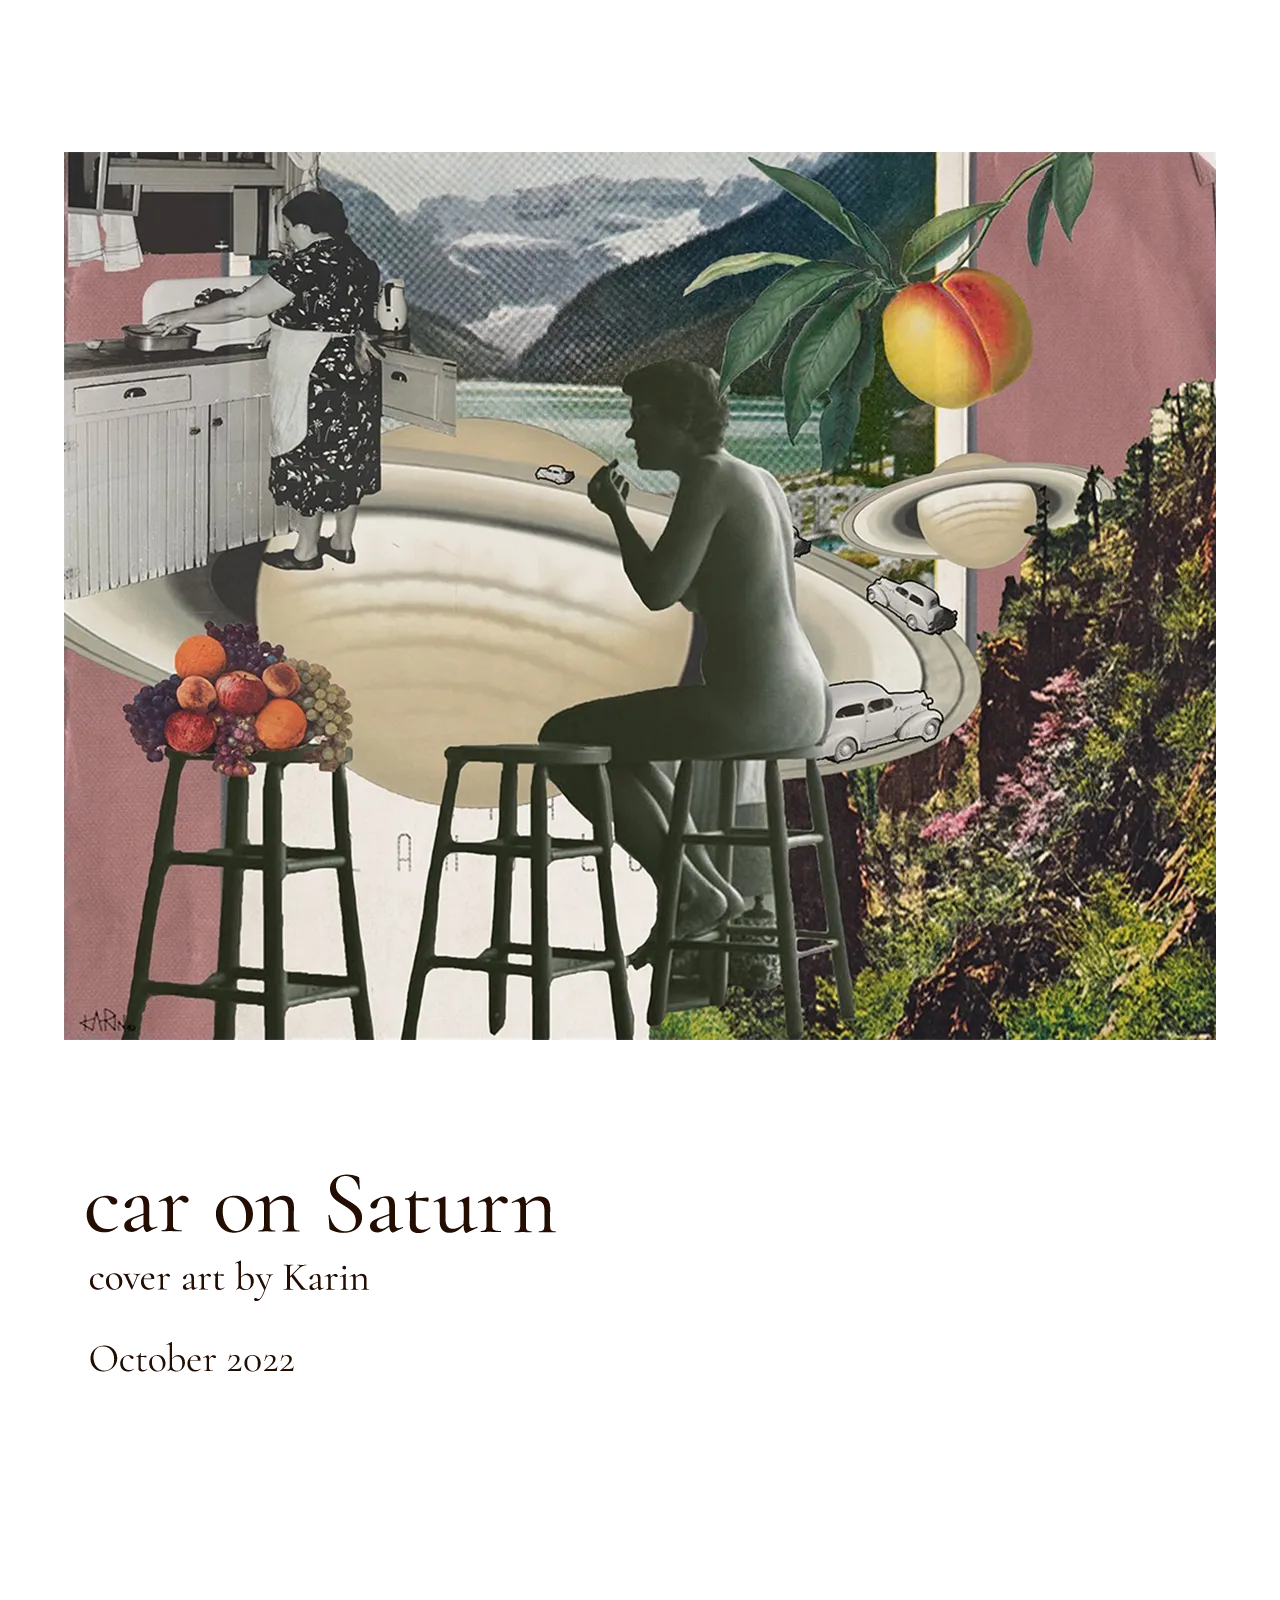 car on Saturn